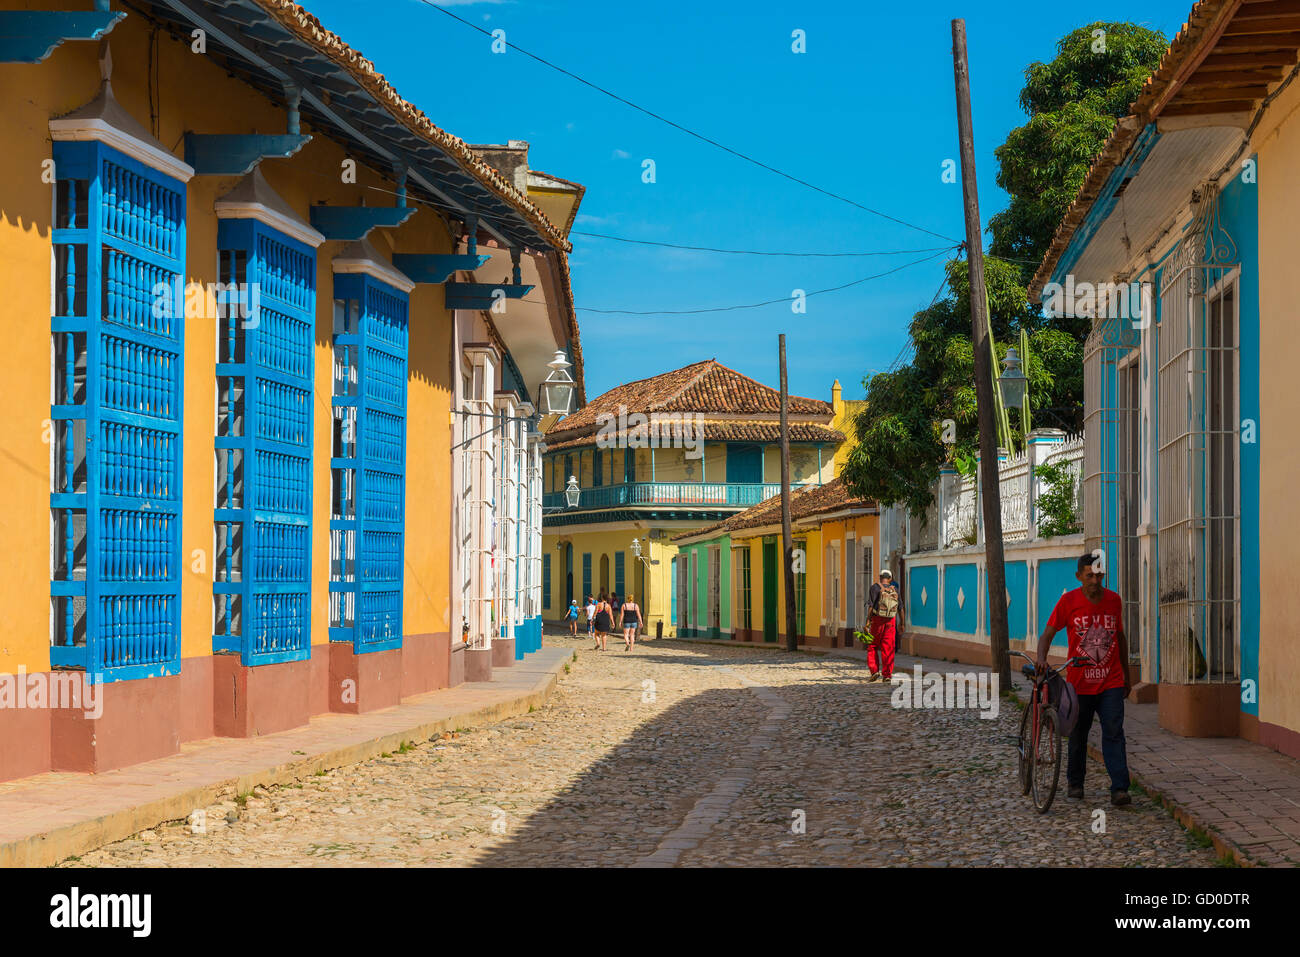 Bunte Altbauten säumen die Straßen von Trinidad, Kuba. Stockfoto